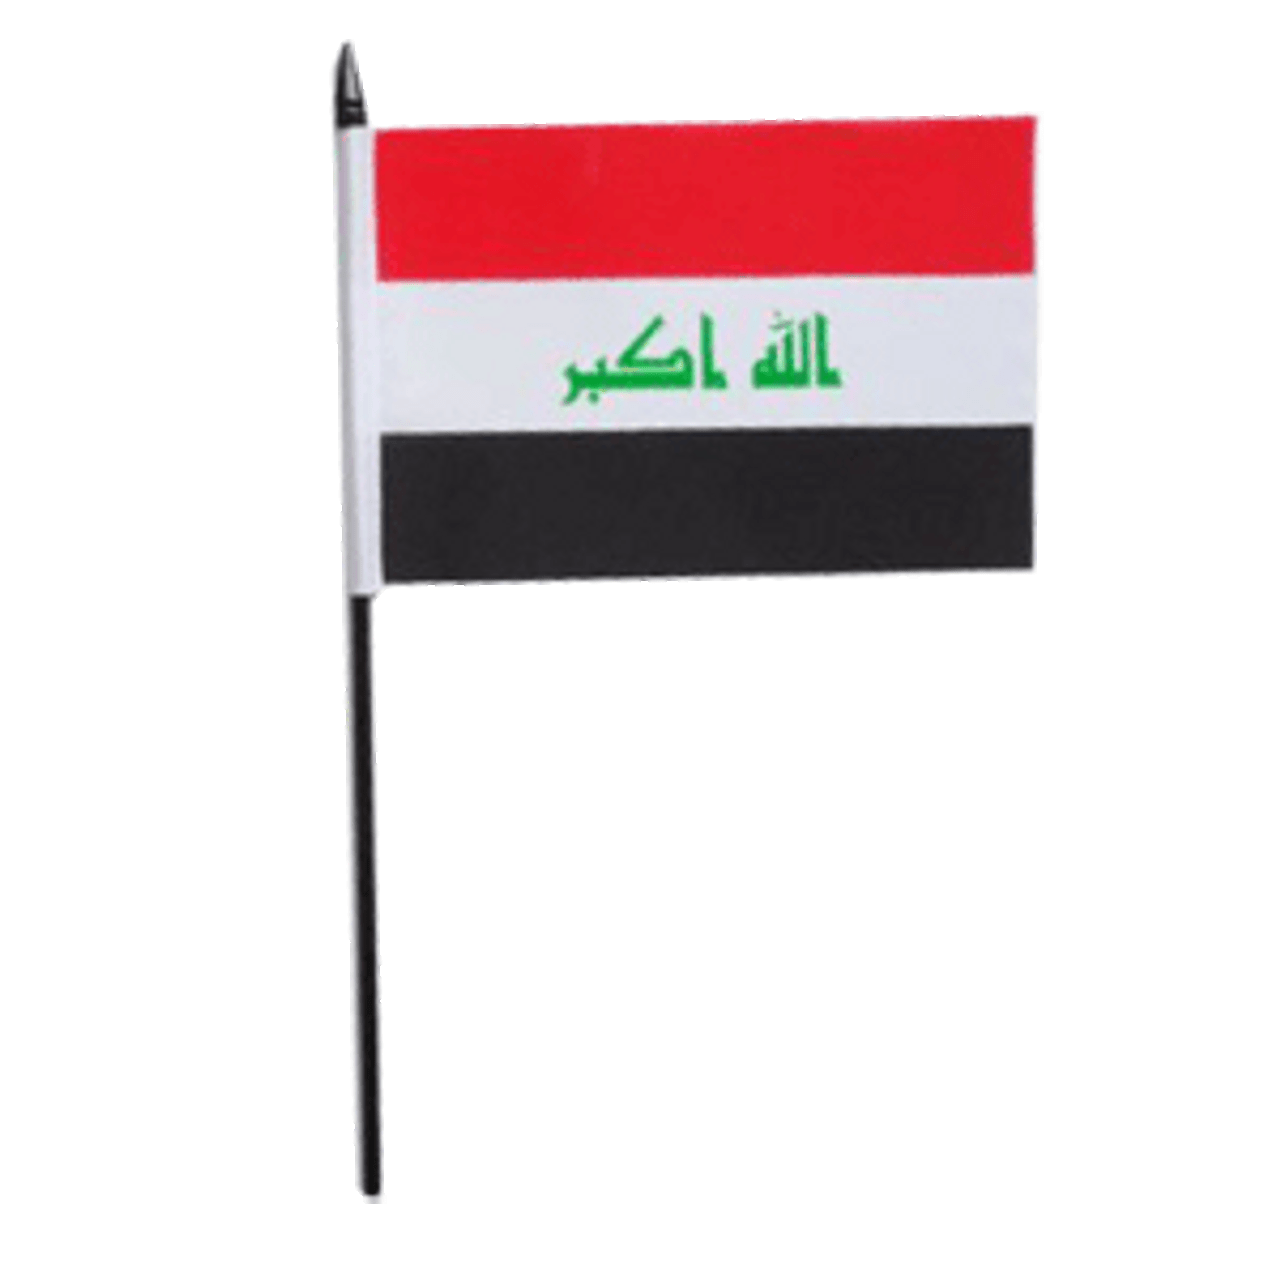 Iraq Desk / Table Flag